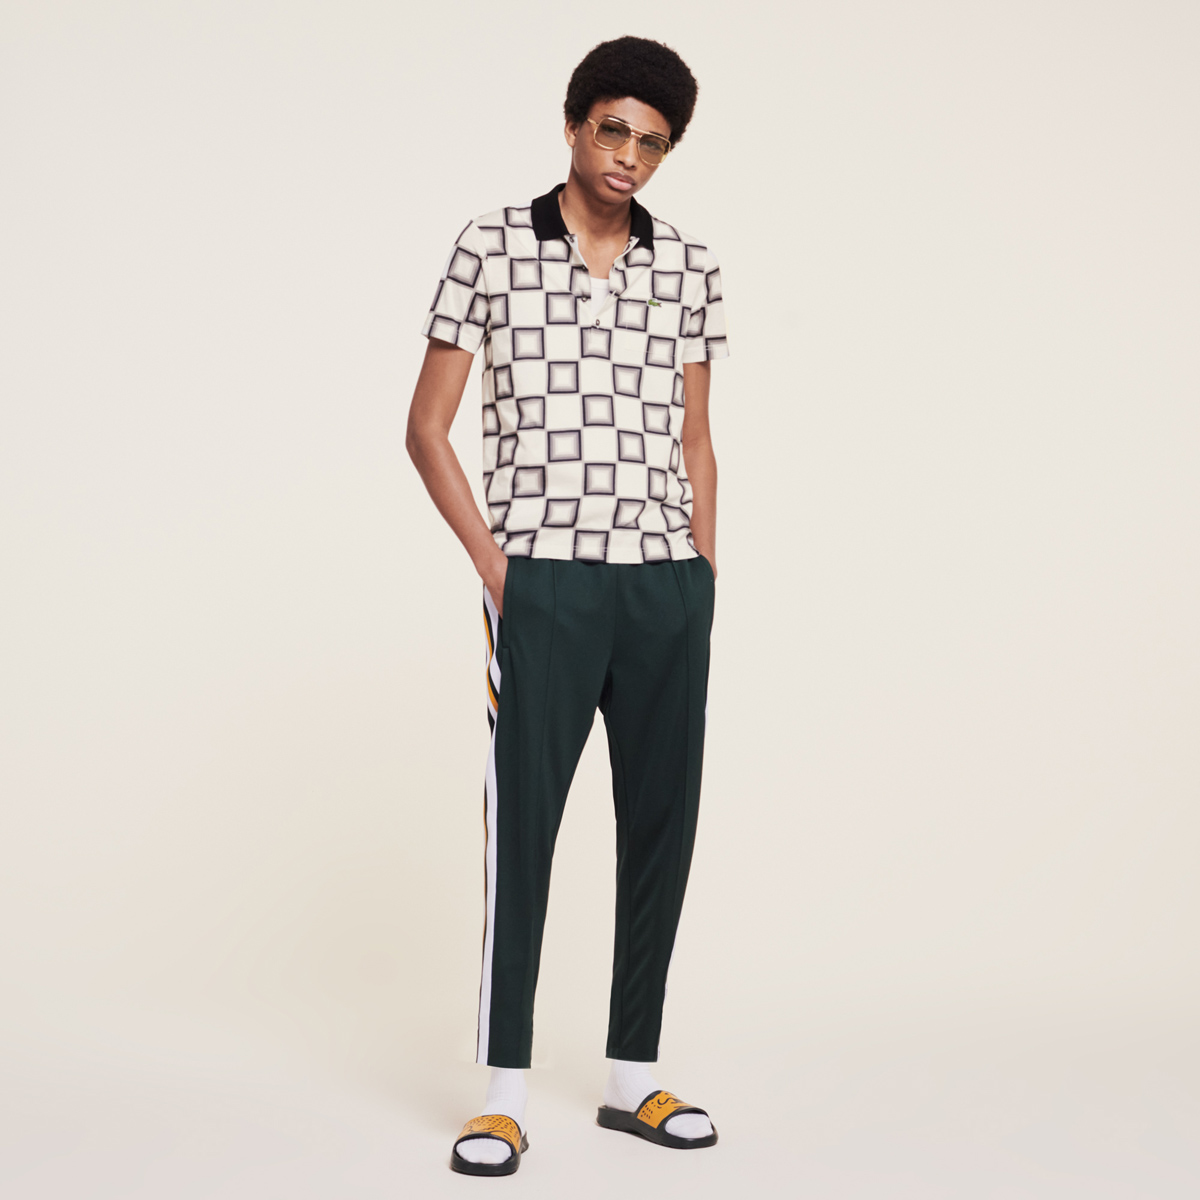 Bruno Mars Launches New Brand as Designer Alter Ego 